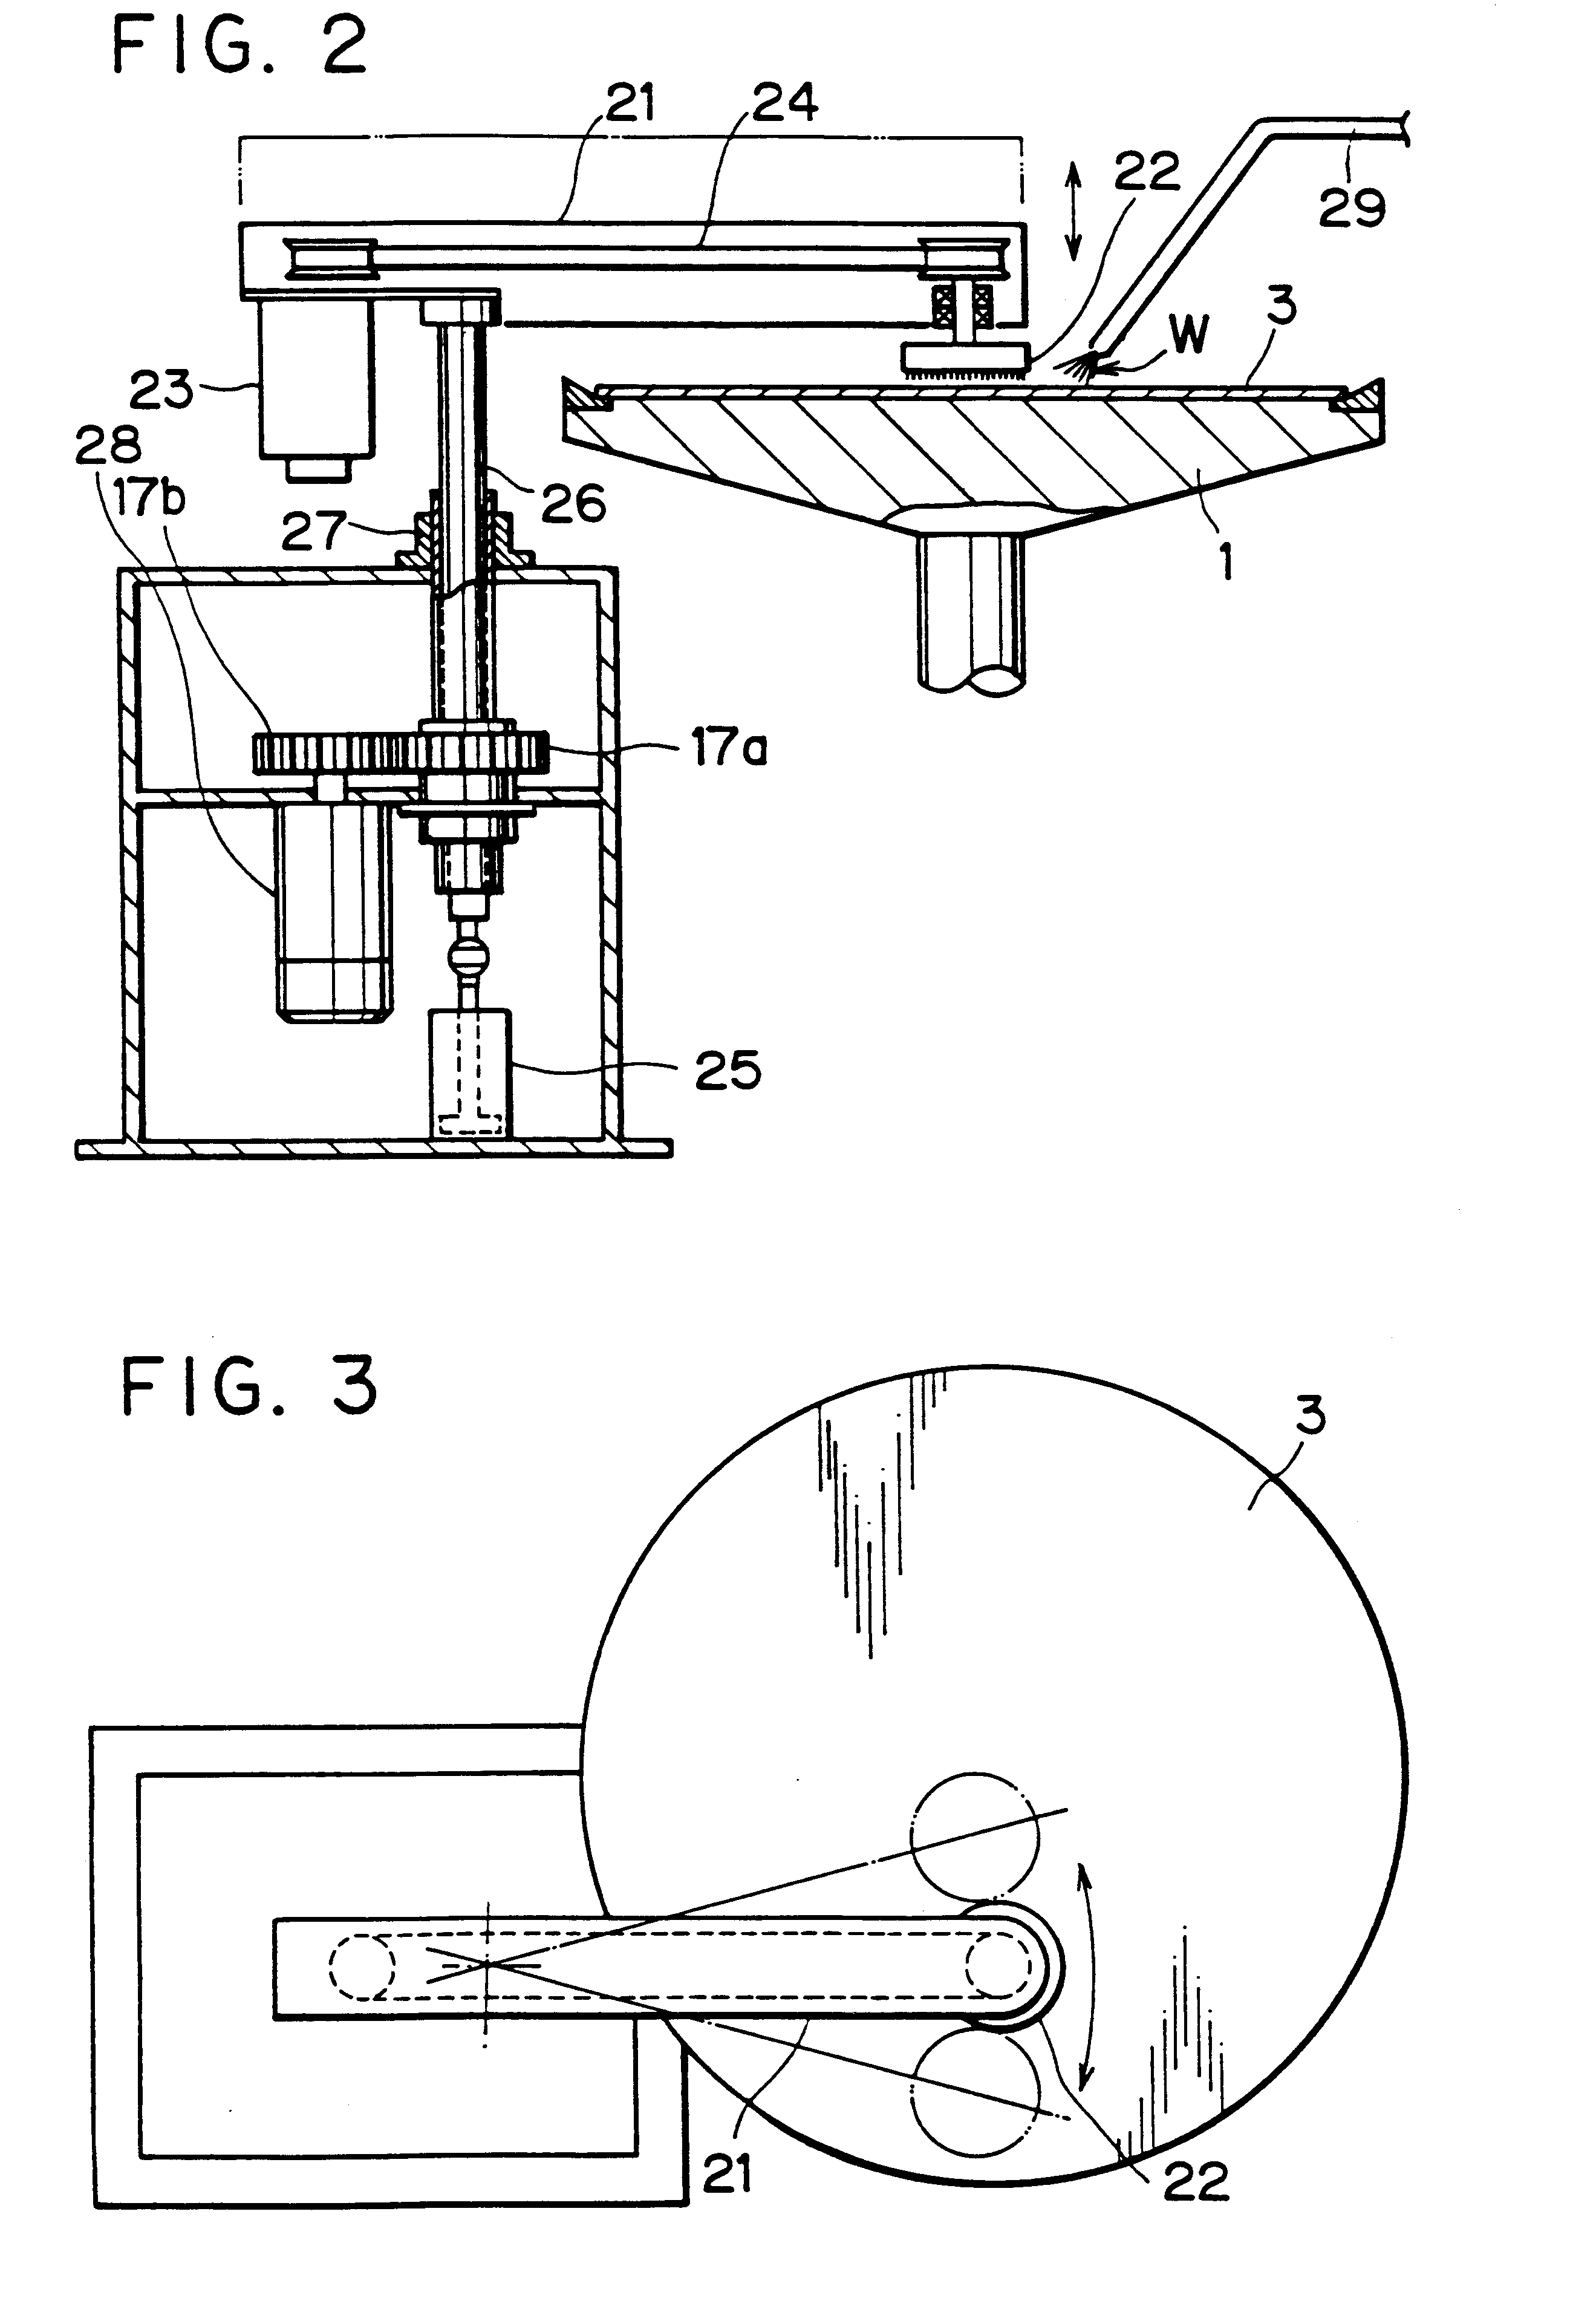 Polishing apparatus and method